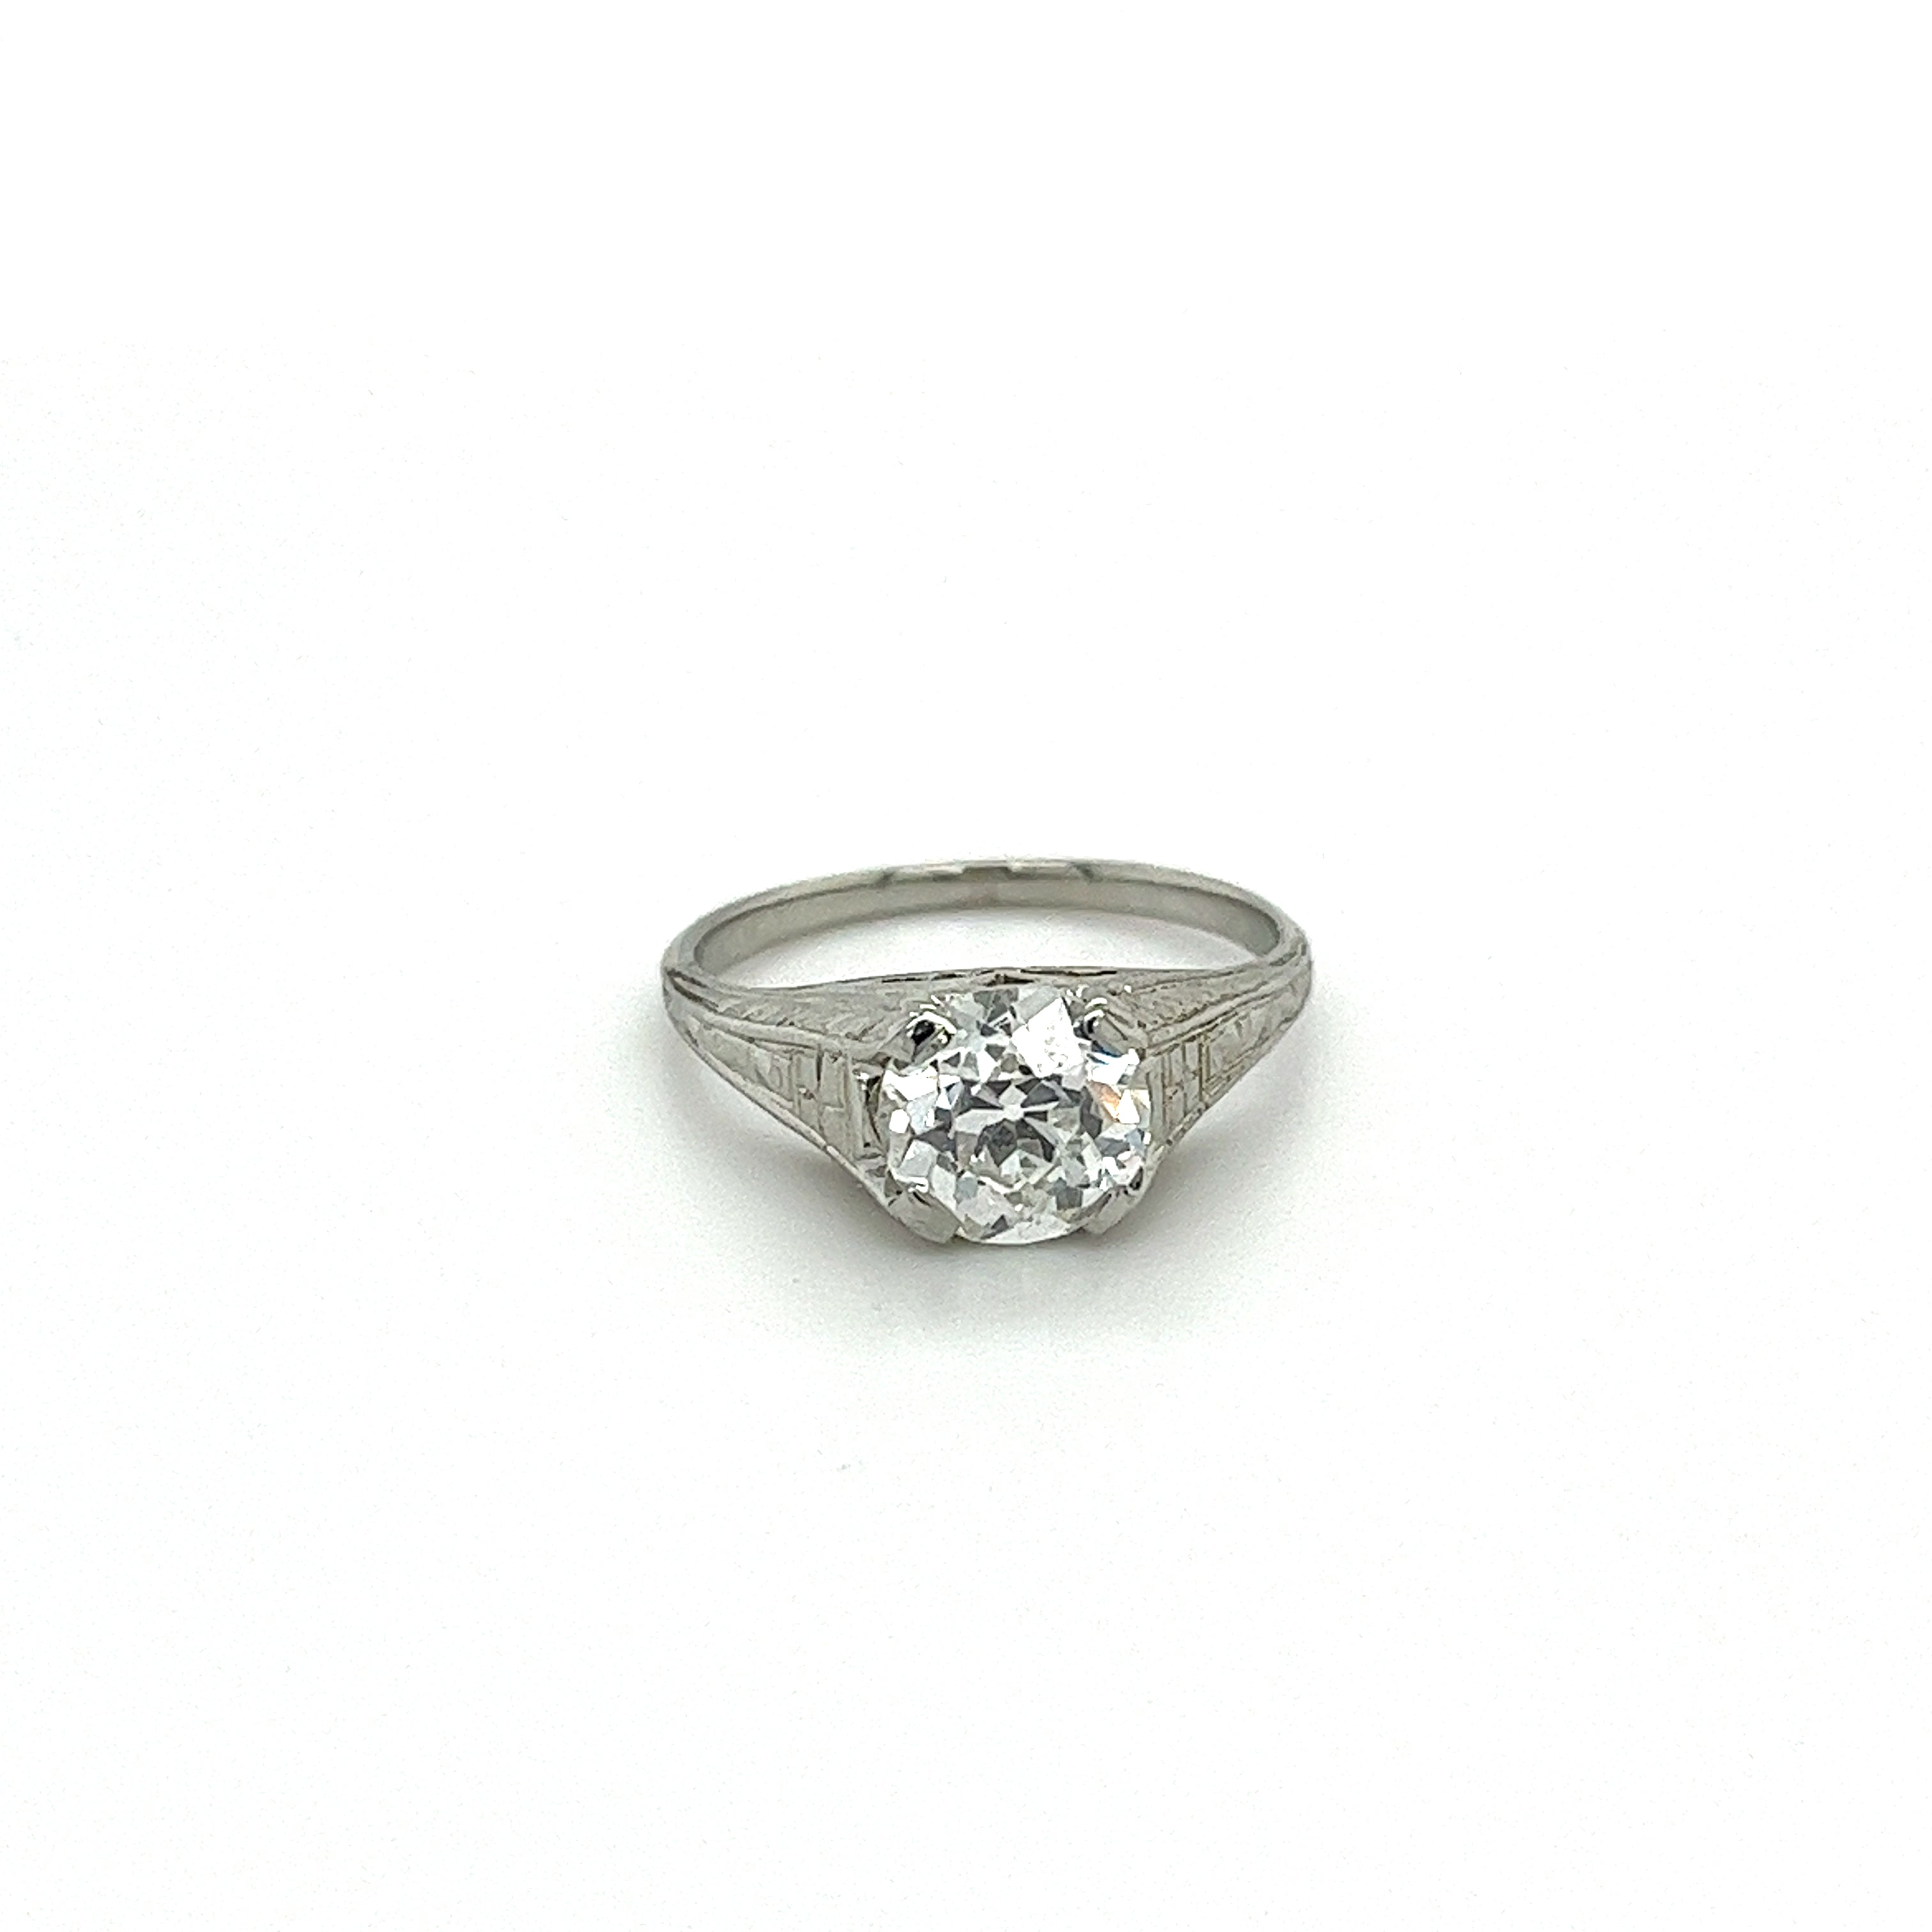 Art-Deco-Old-European-Cut-Vintage-Engagement-Ring-1_69ct-GVVS1-GIA-Engagement-Ring-2.jpg